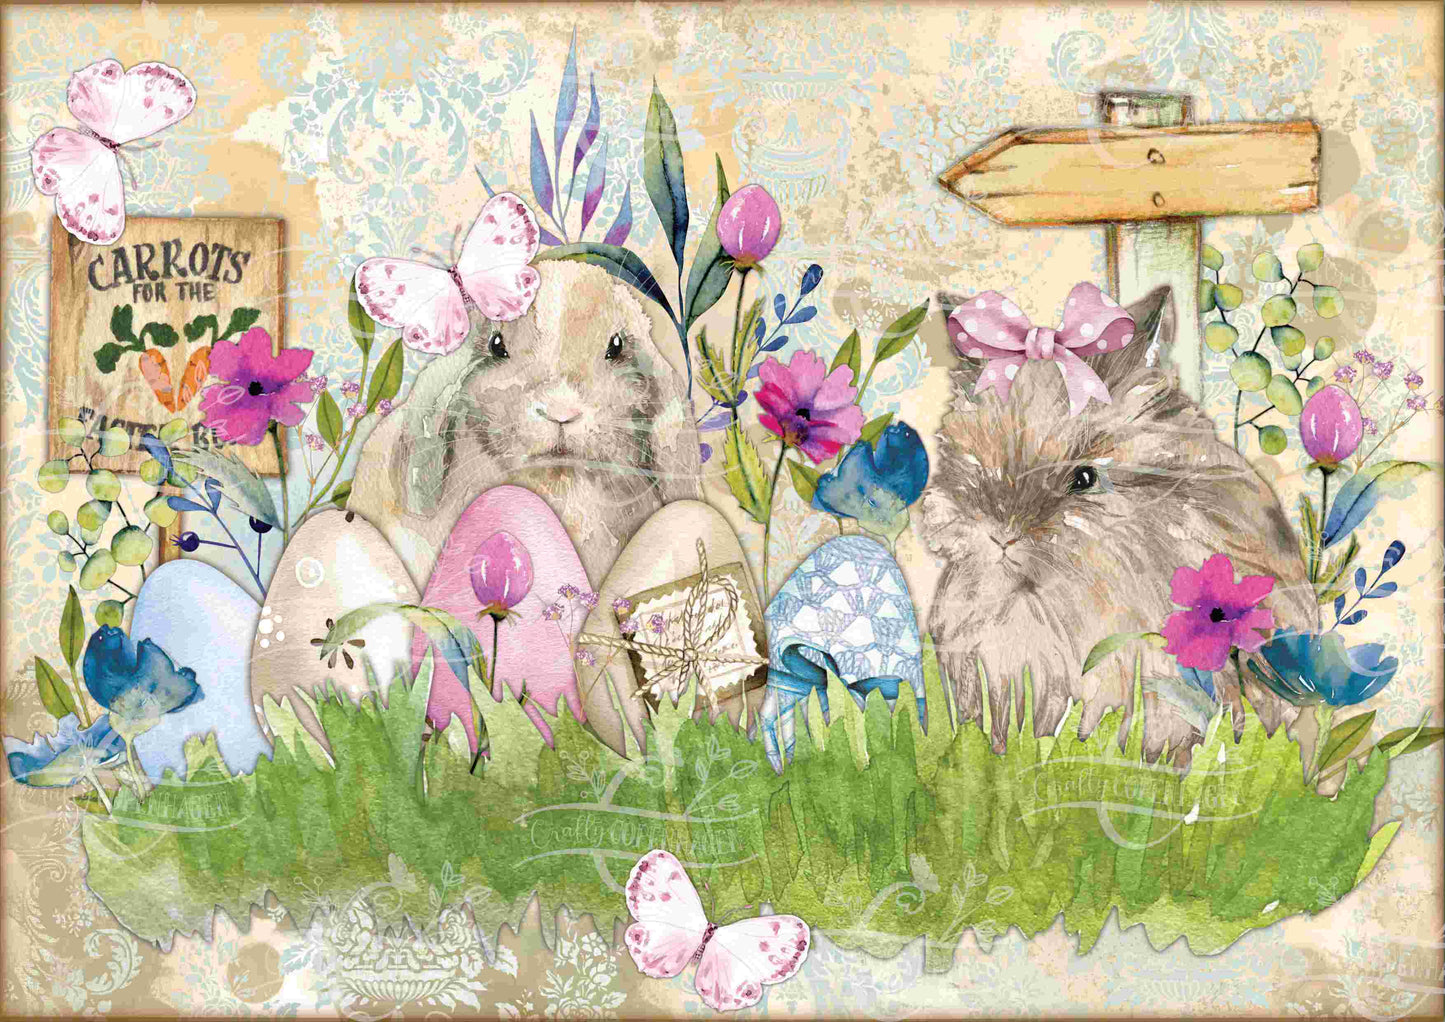 Oh Happy Day! - Printable Vintage Easter/Spring Ephemera for Junk